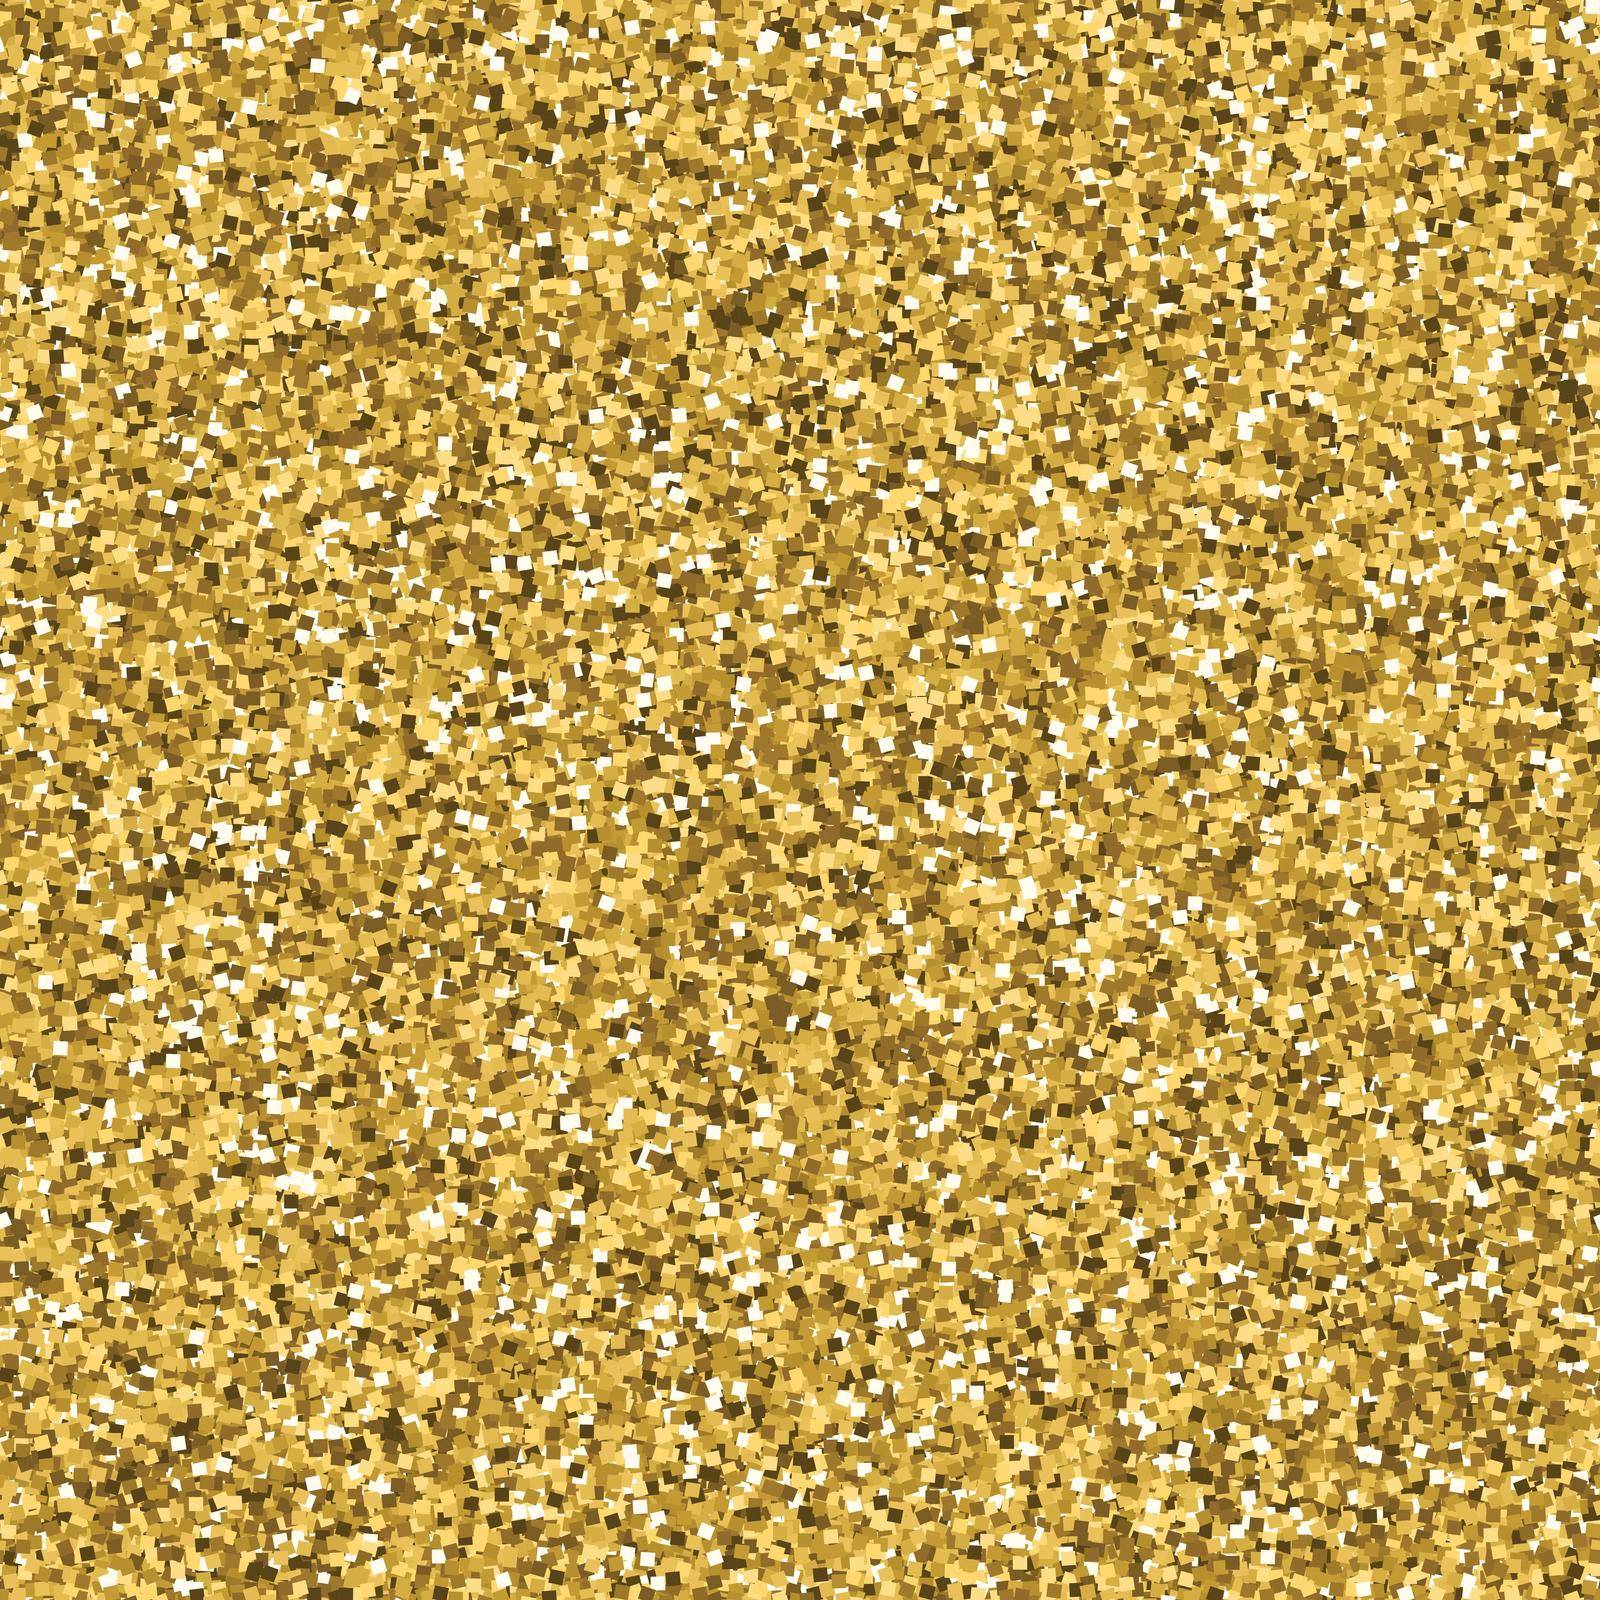 Gold glitter texture, seamless background Vector illustration